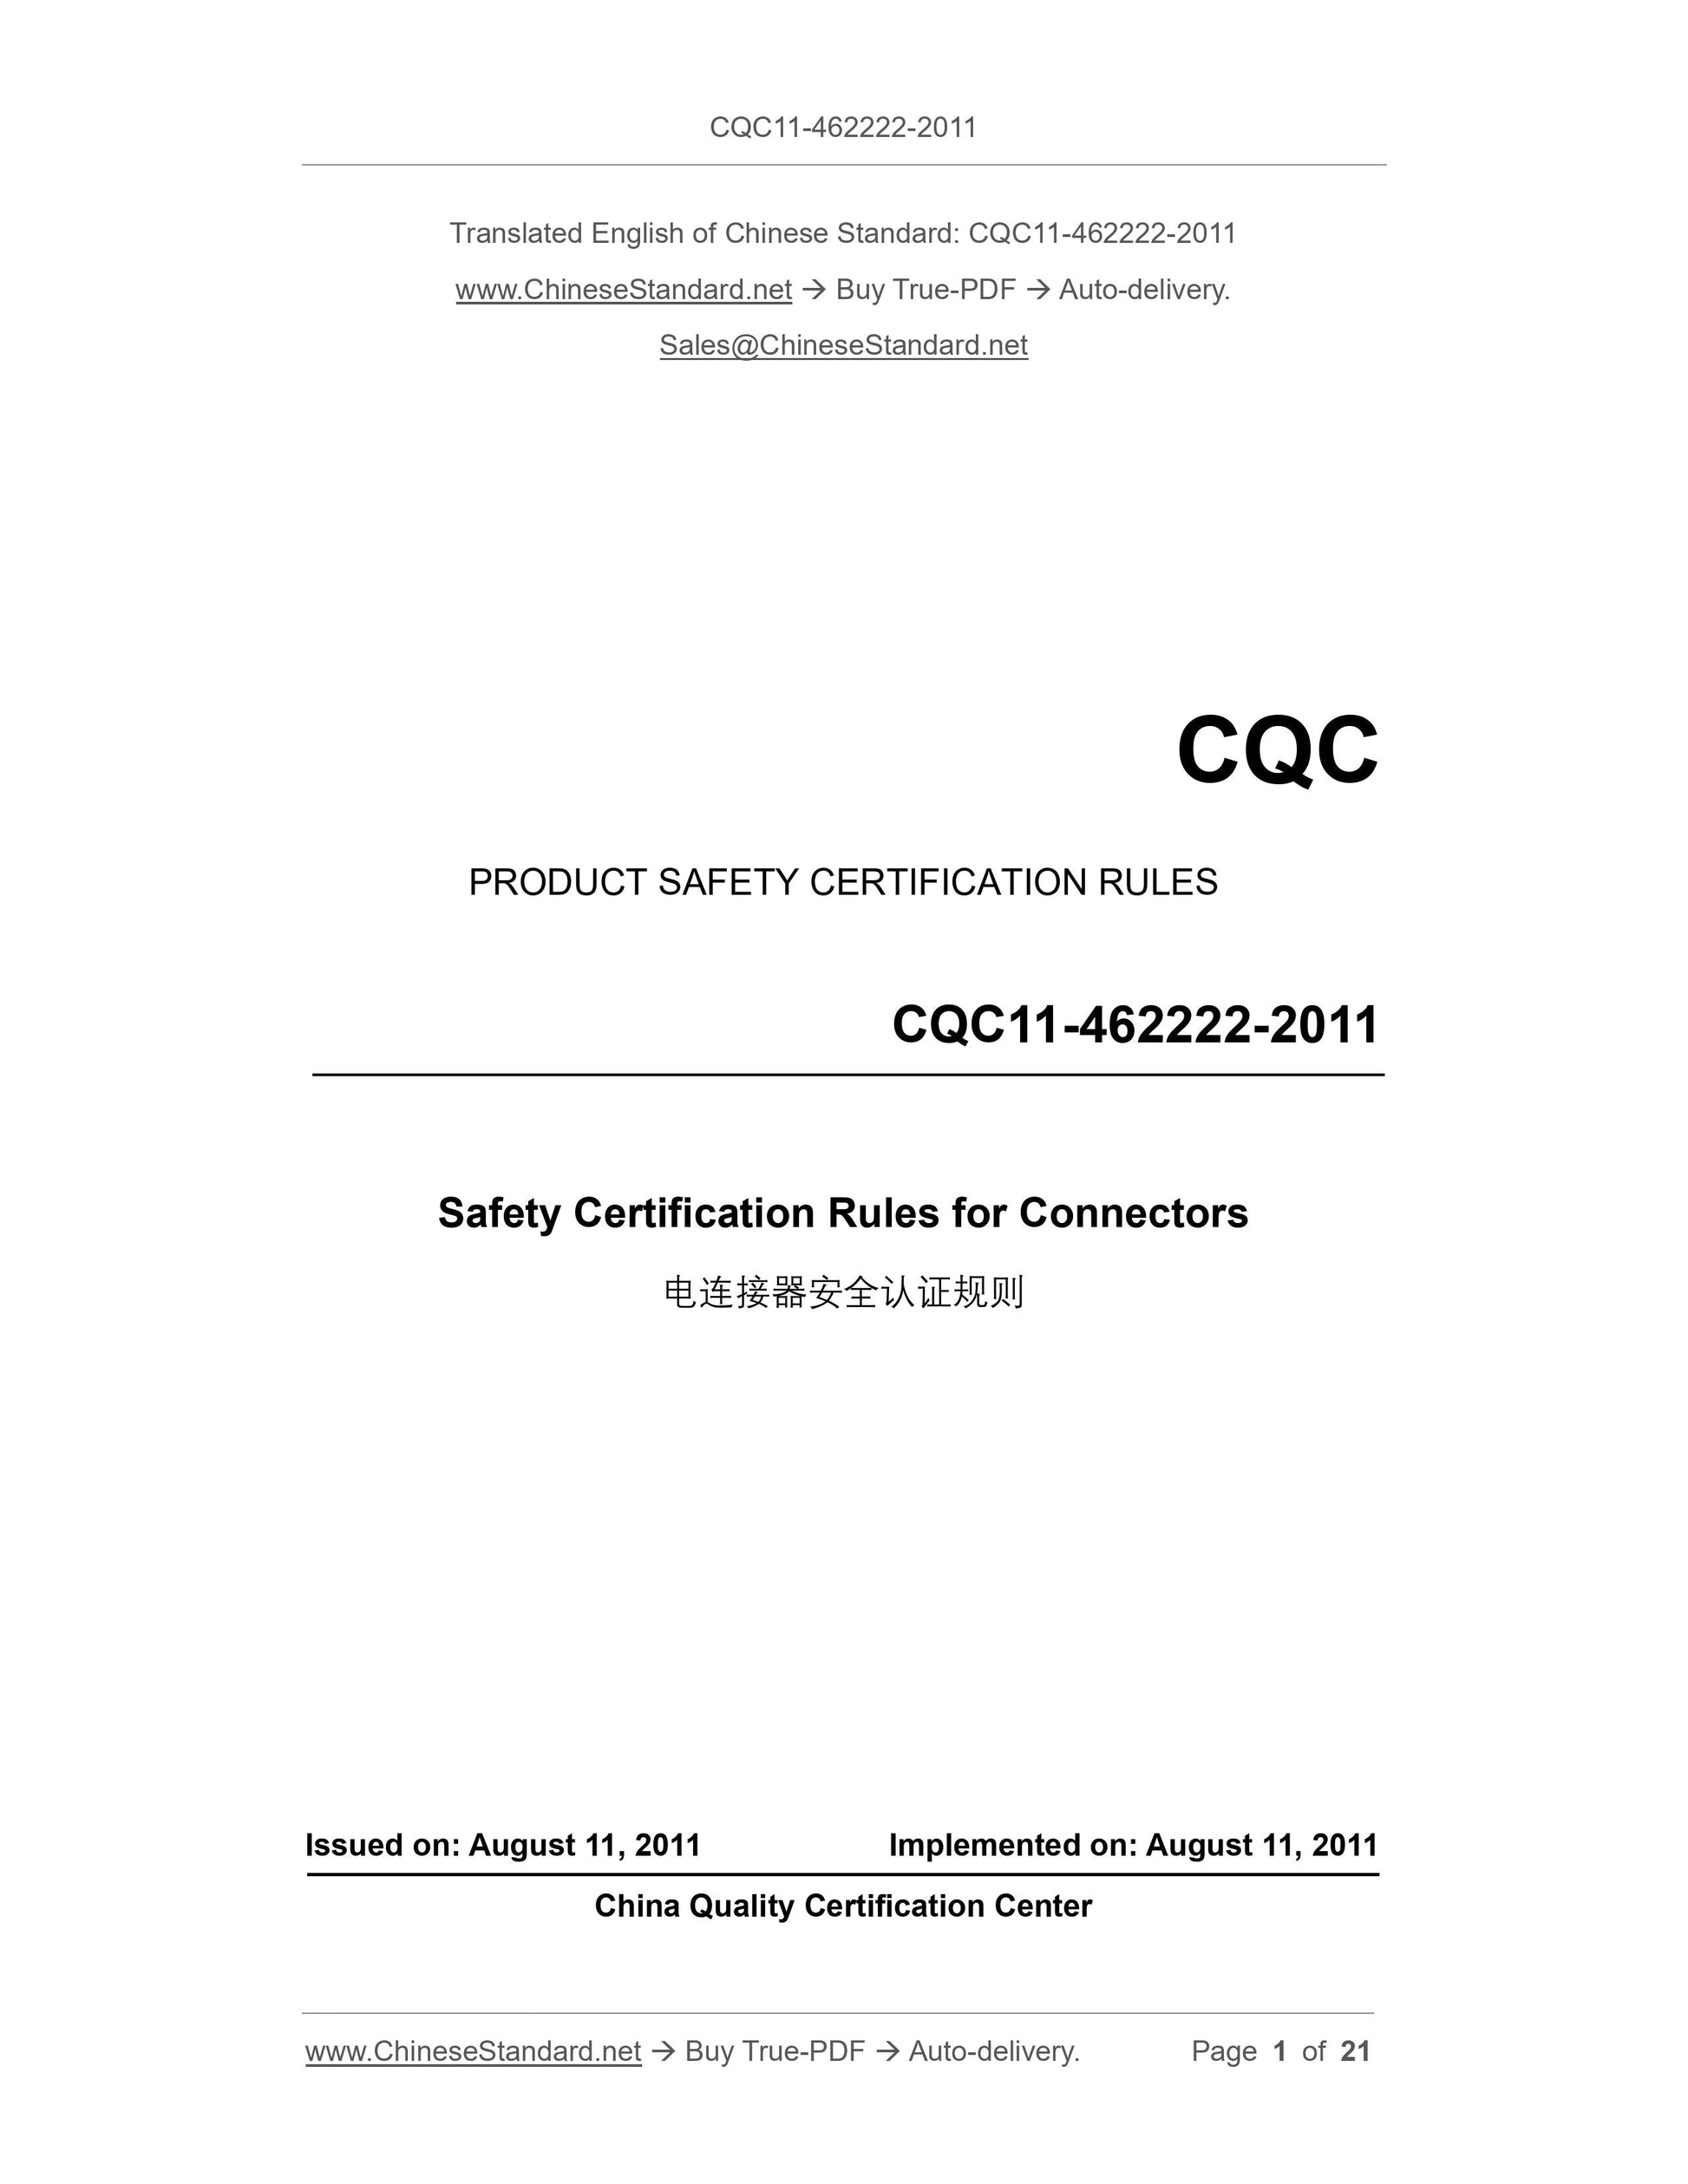 CQC11-462222-2011 Page 1